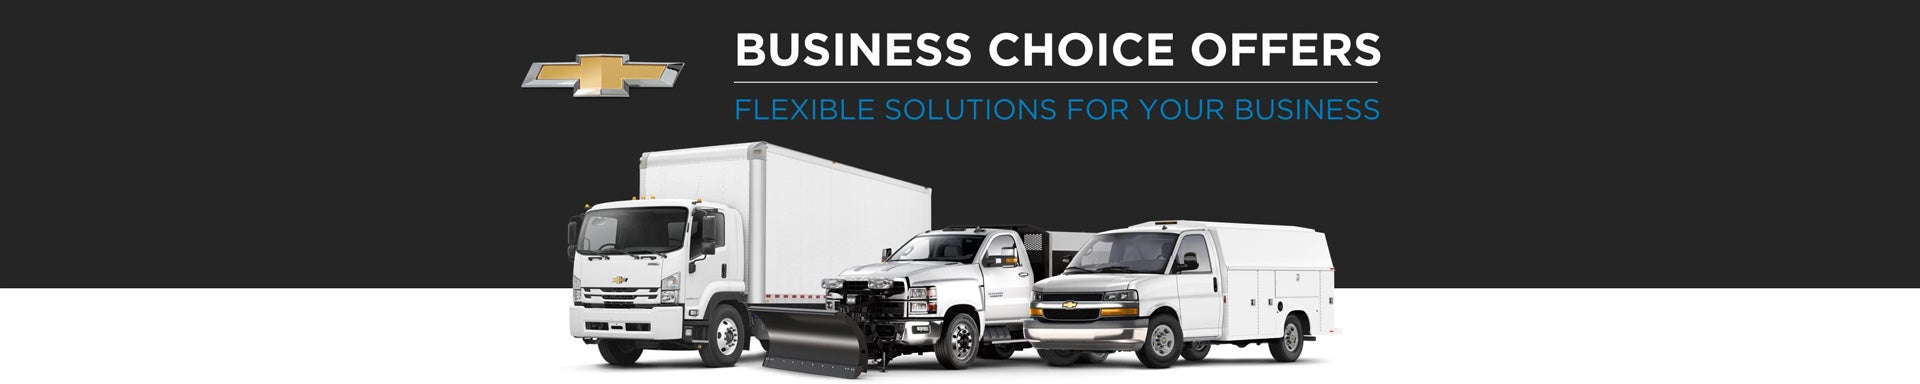 Chevrolet Business Choice Offers - Flexible Solutions for your Business - Koons Buick GMC Woodbridge in Woodbridge VA